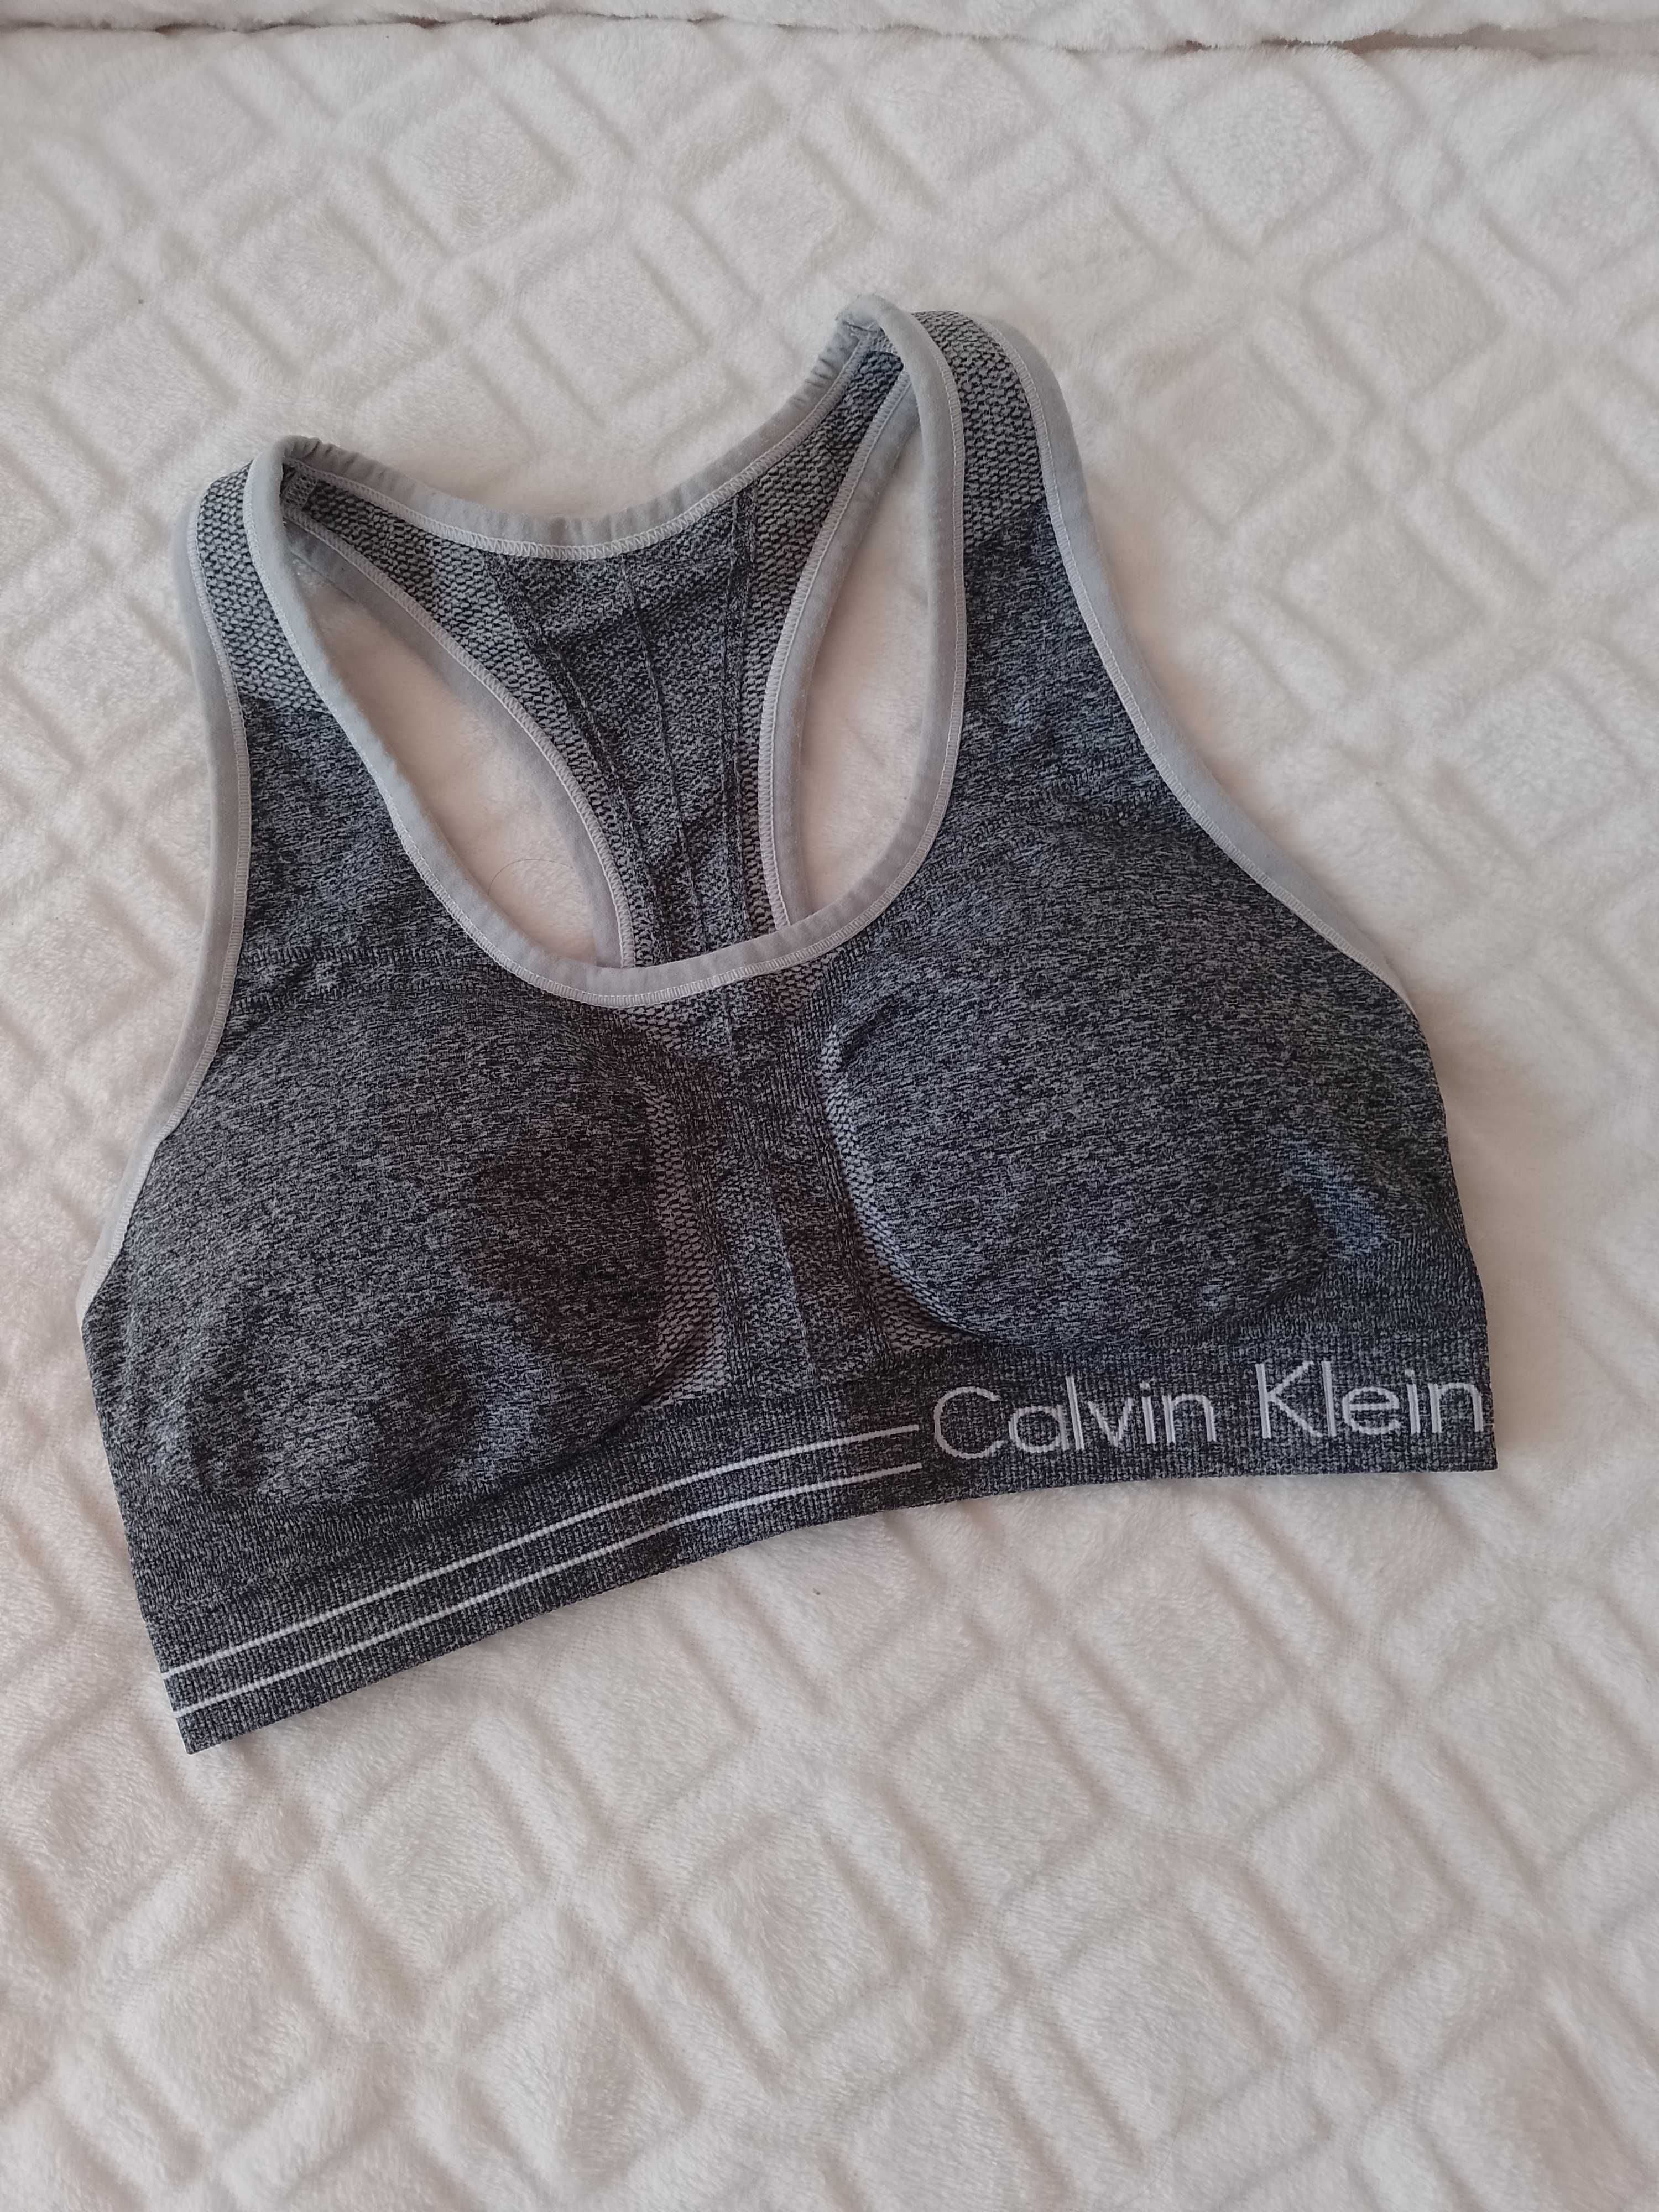 (S/M) Calvin Klein/ Szary Top fitness, biustonosz sportowy, bokserka